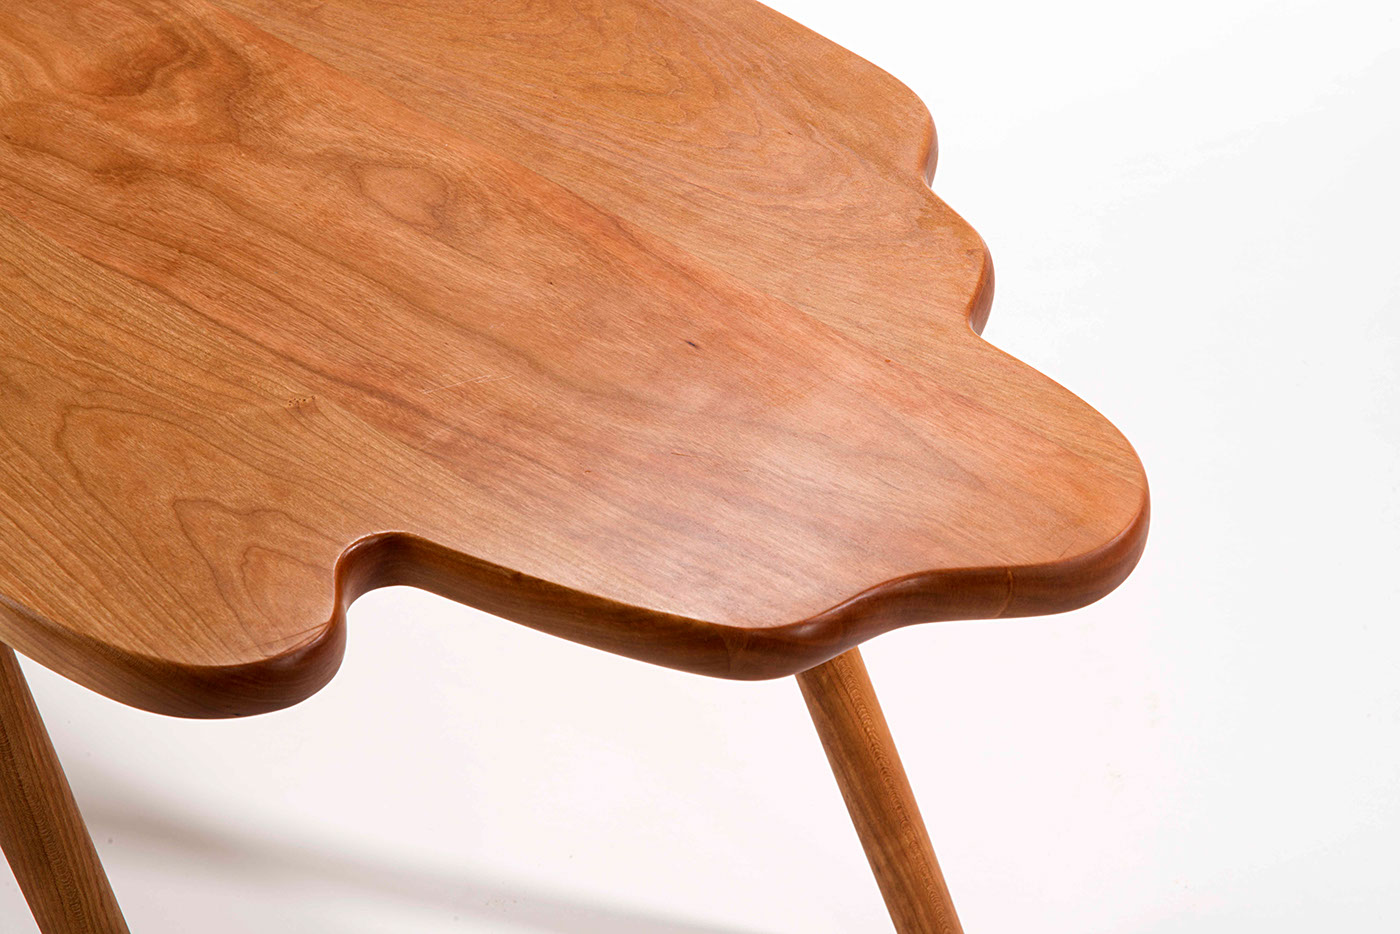 cherry wood woodworking furniture design furniture design  Danish Modern live edge Japanese design wood turning